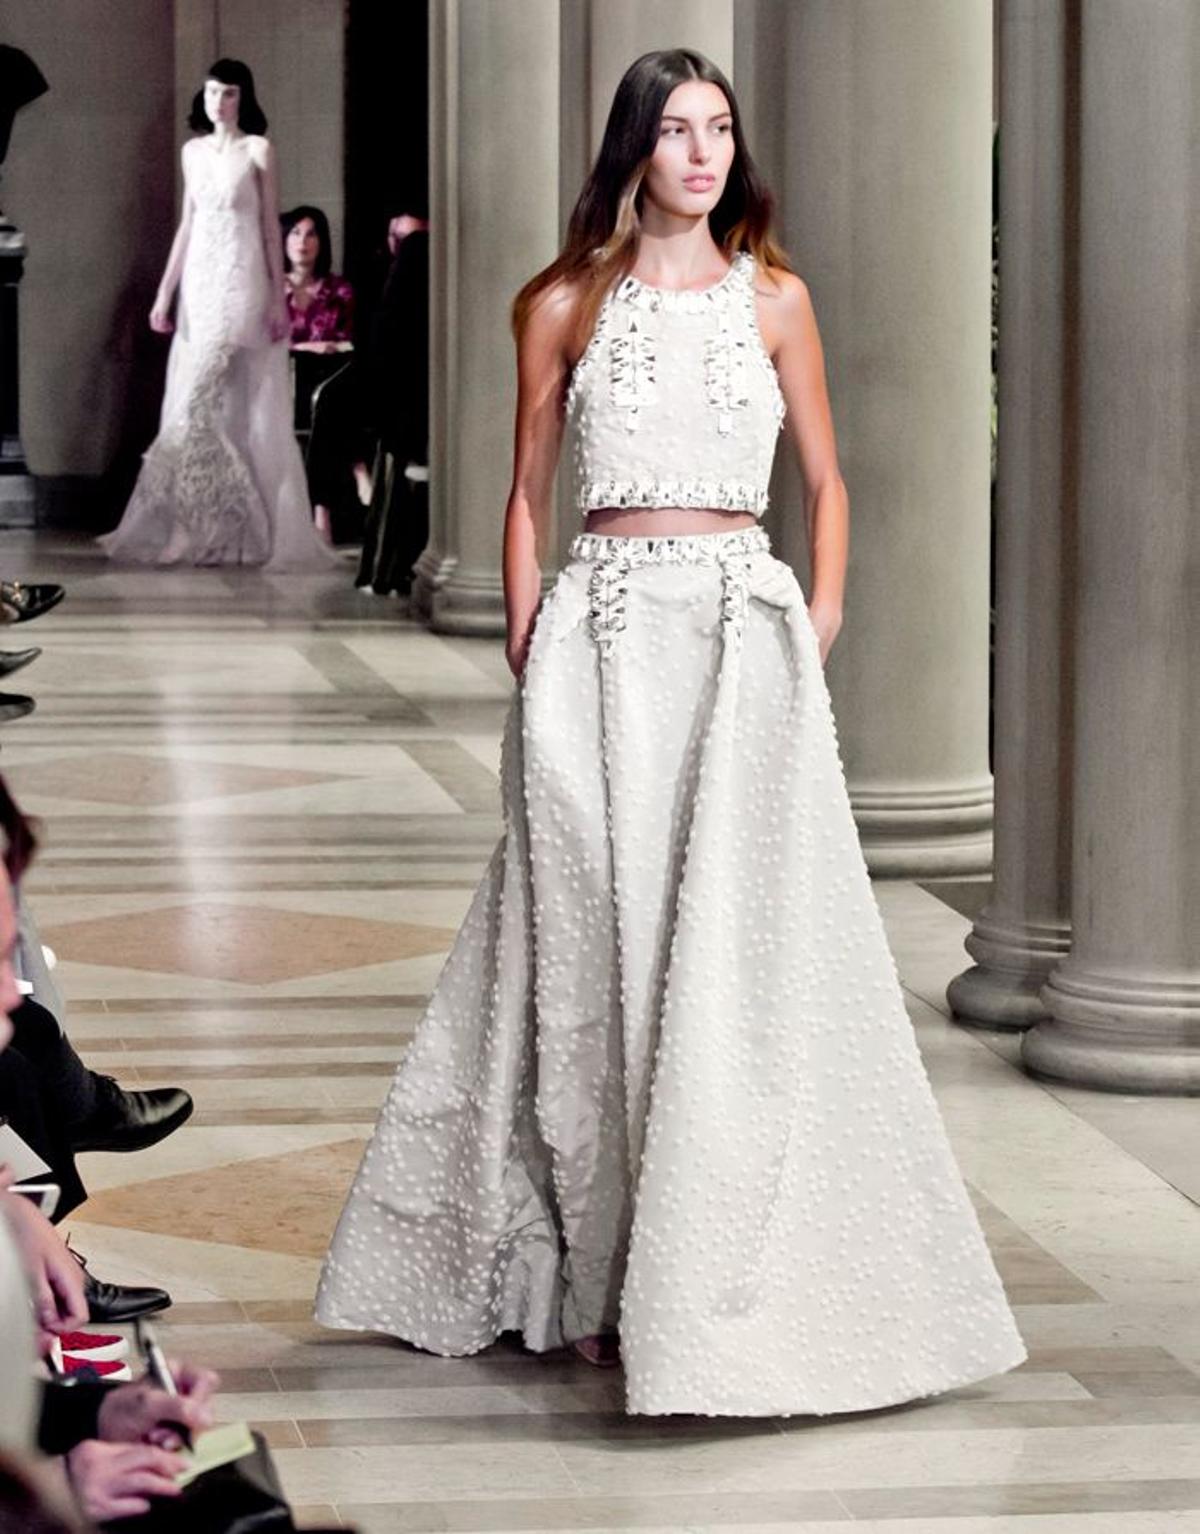 Nueva York Fashion Week: Carolina Herrera, crop top y falda larga